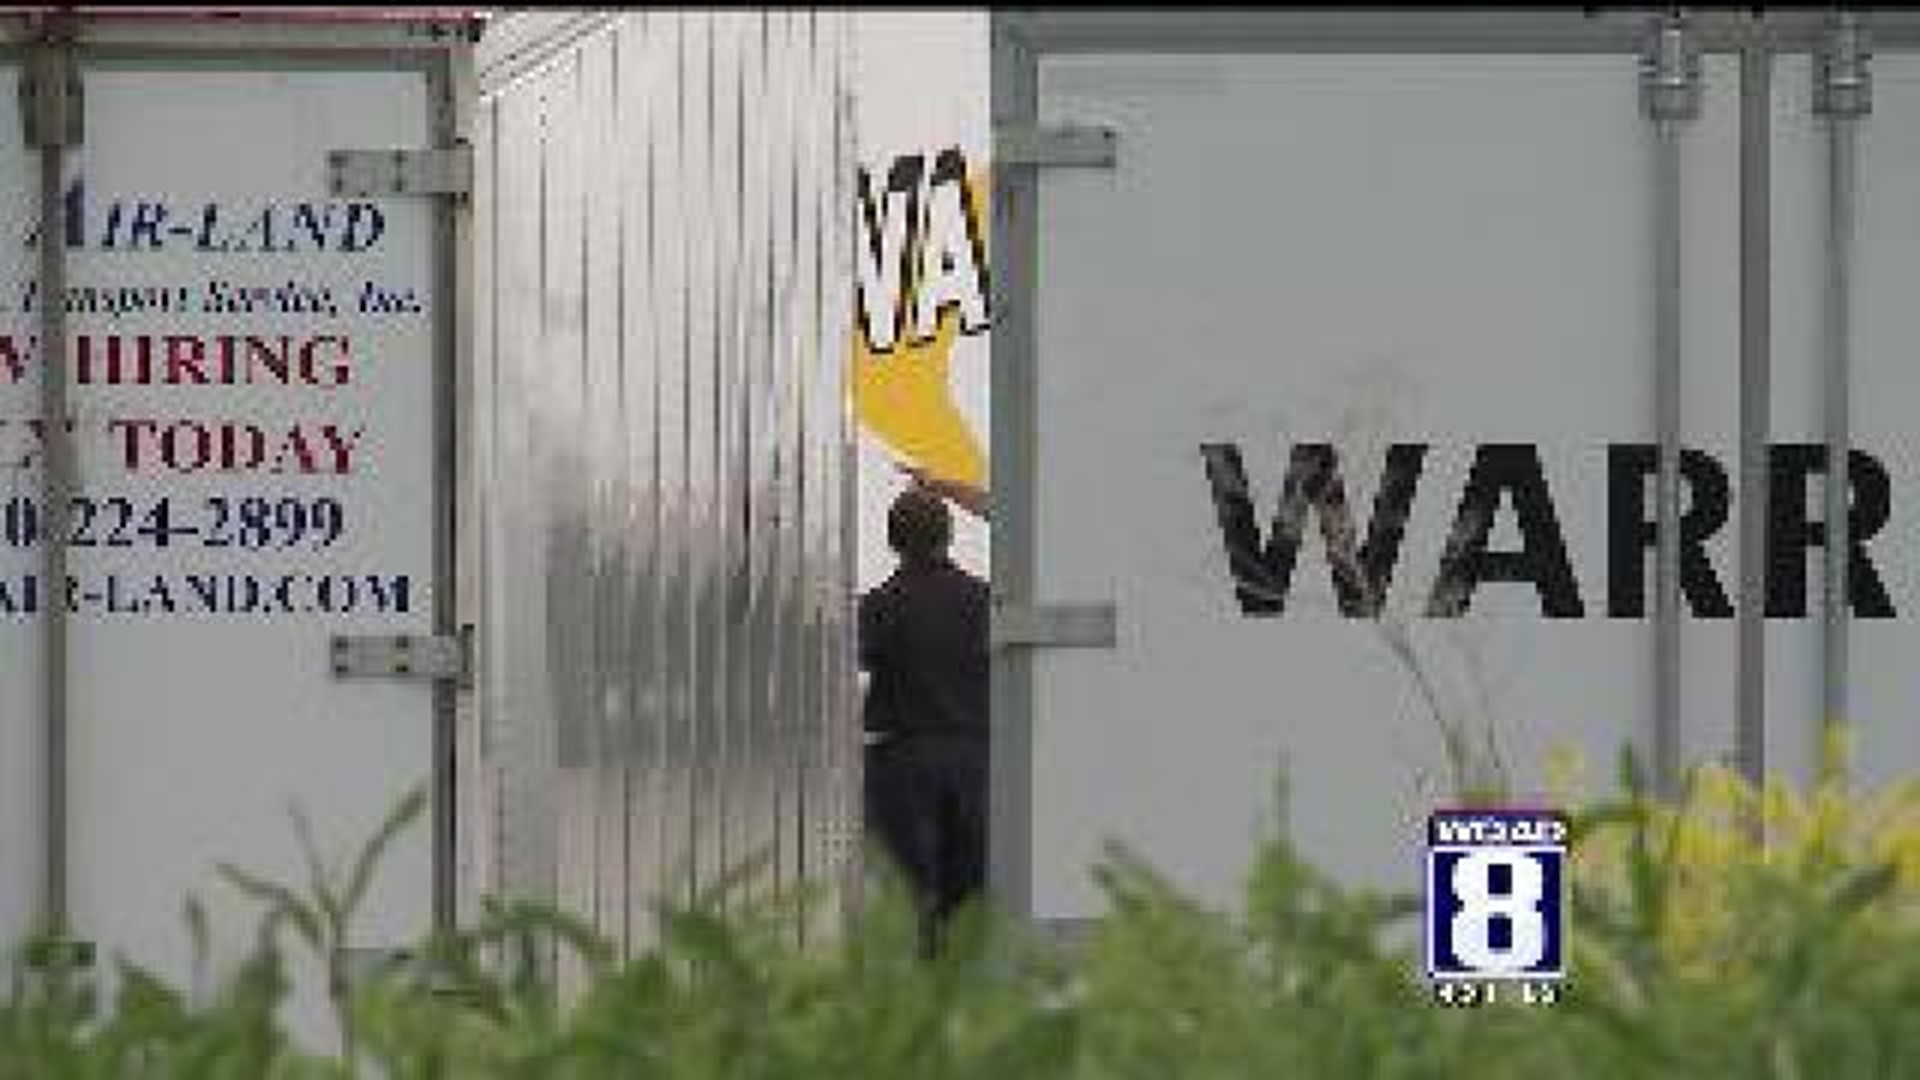 Worker killed at John Deere facility